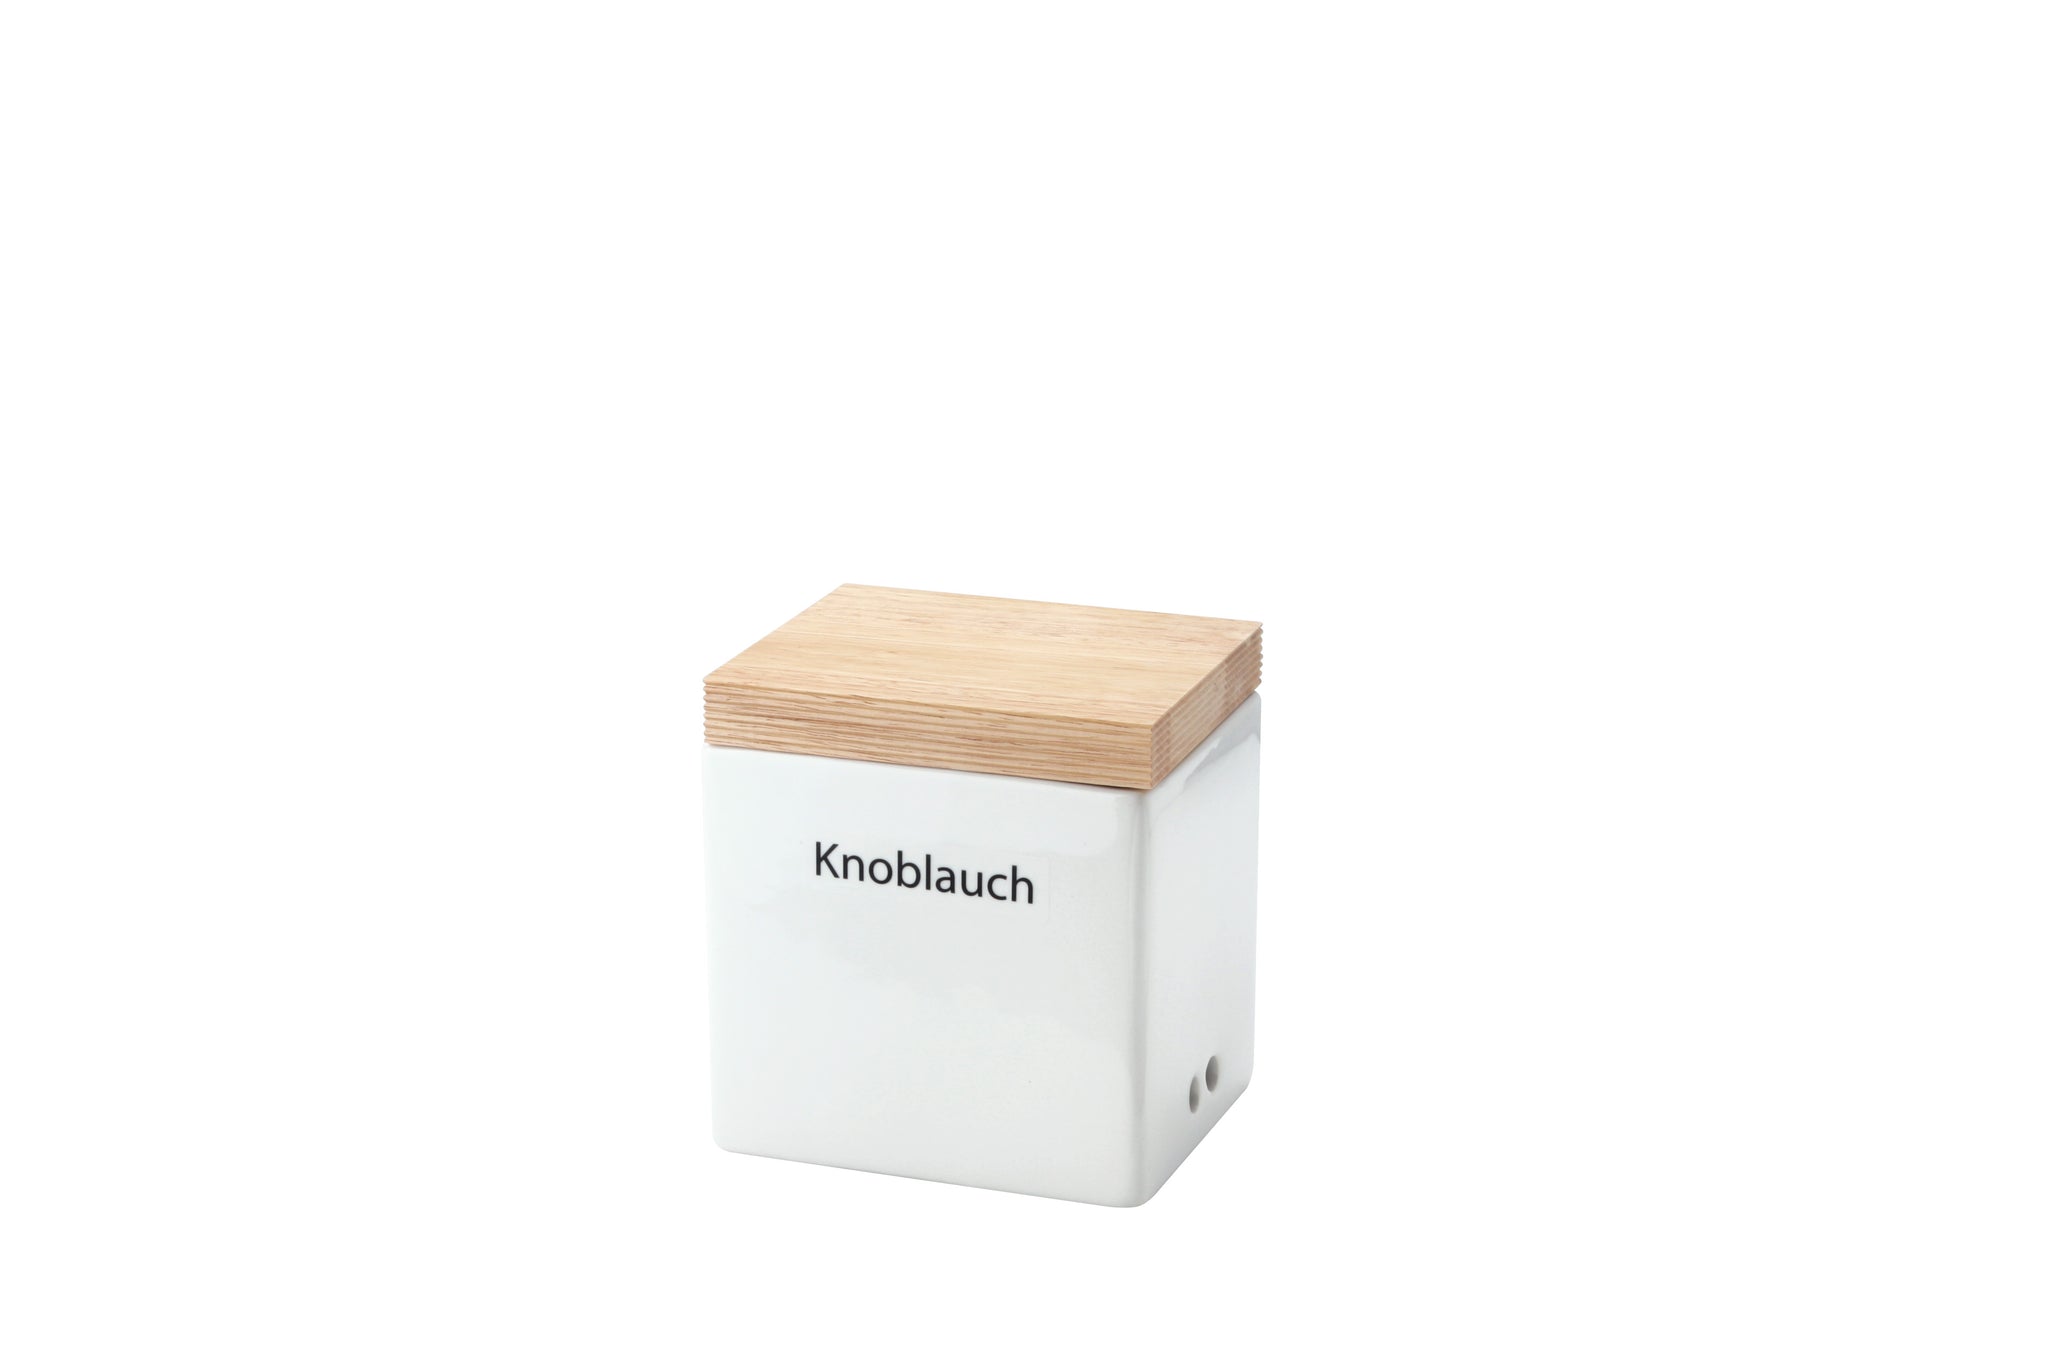 Vorratsdose mit Holzdeckel "Knoblauch" Keramik 14x12x15,5cm